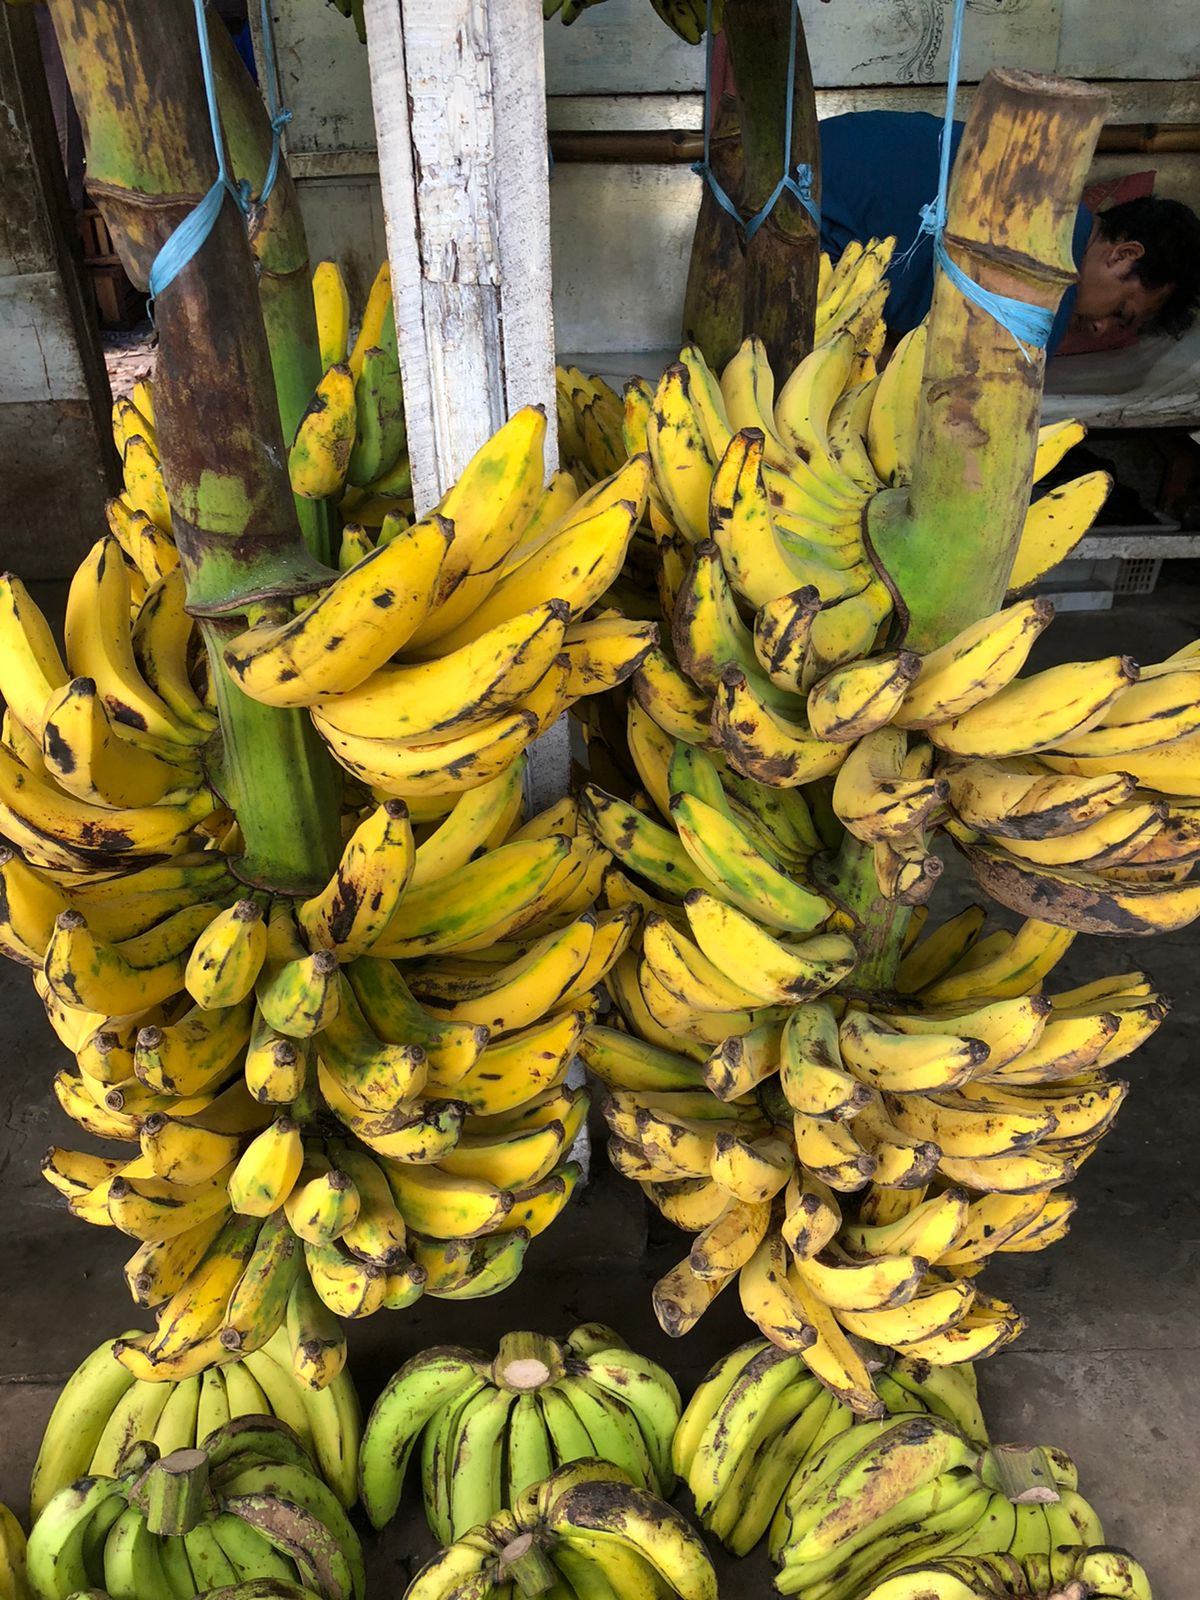 Sejumlah buah pisang yang berada di Pasar Lembang, Kecamatan Ciledug, Kota Tangerang, Jumat, 3 September.